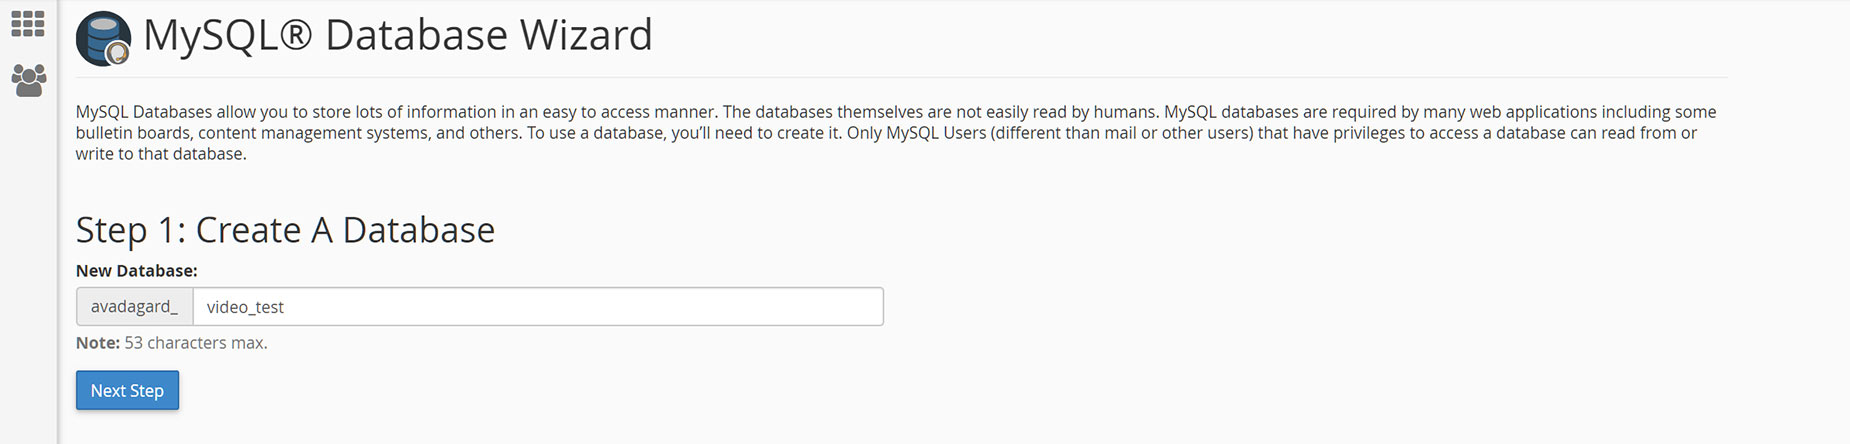 cPanel - Creating a MySQL Database